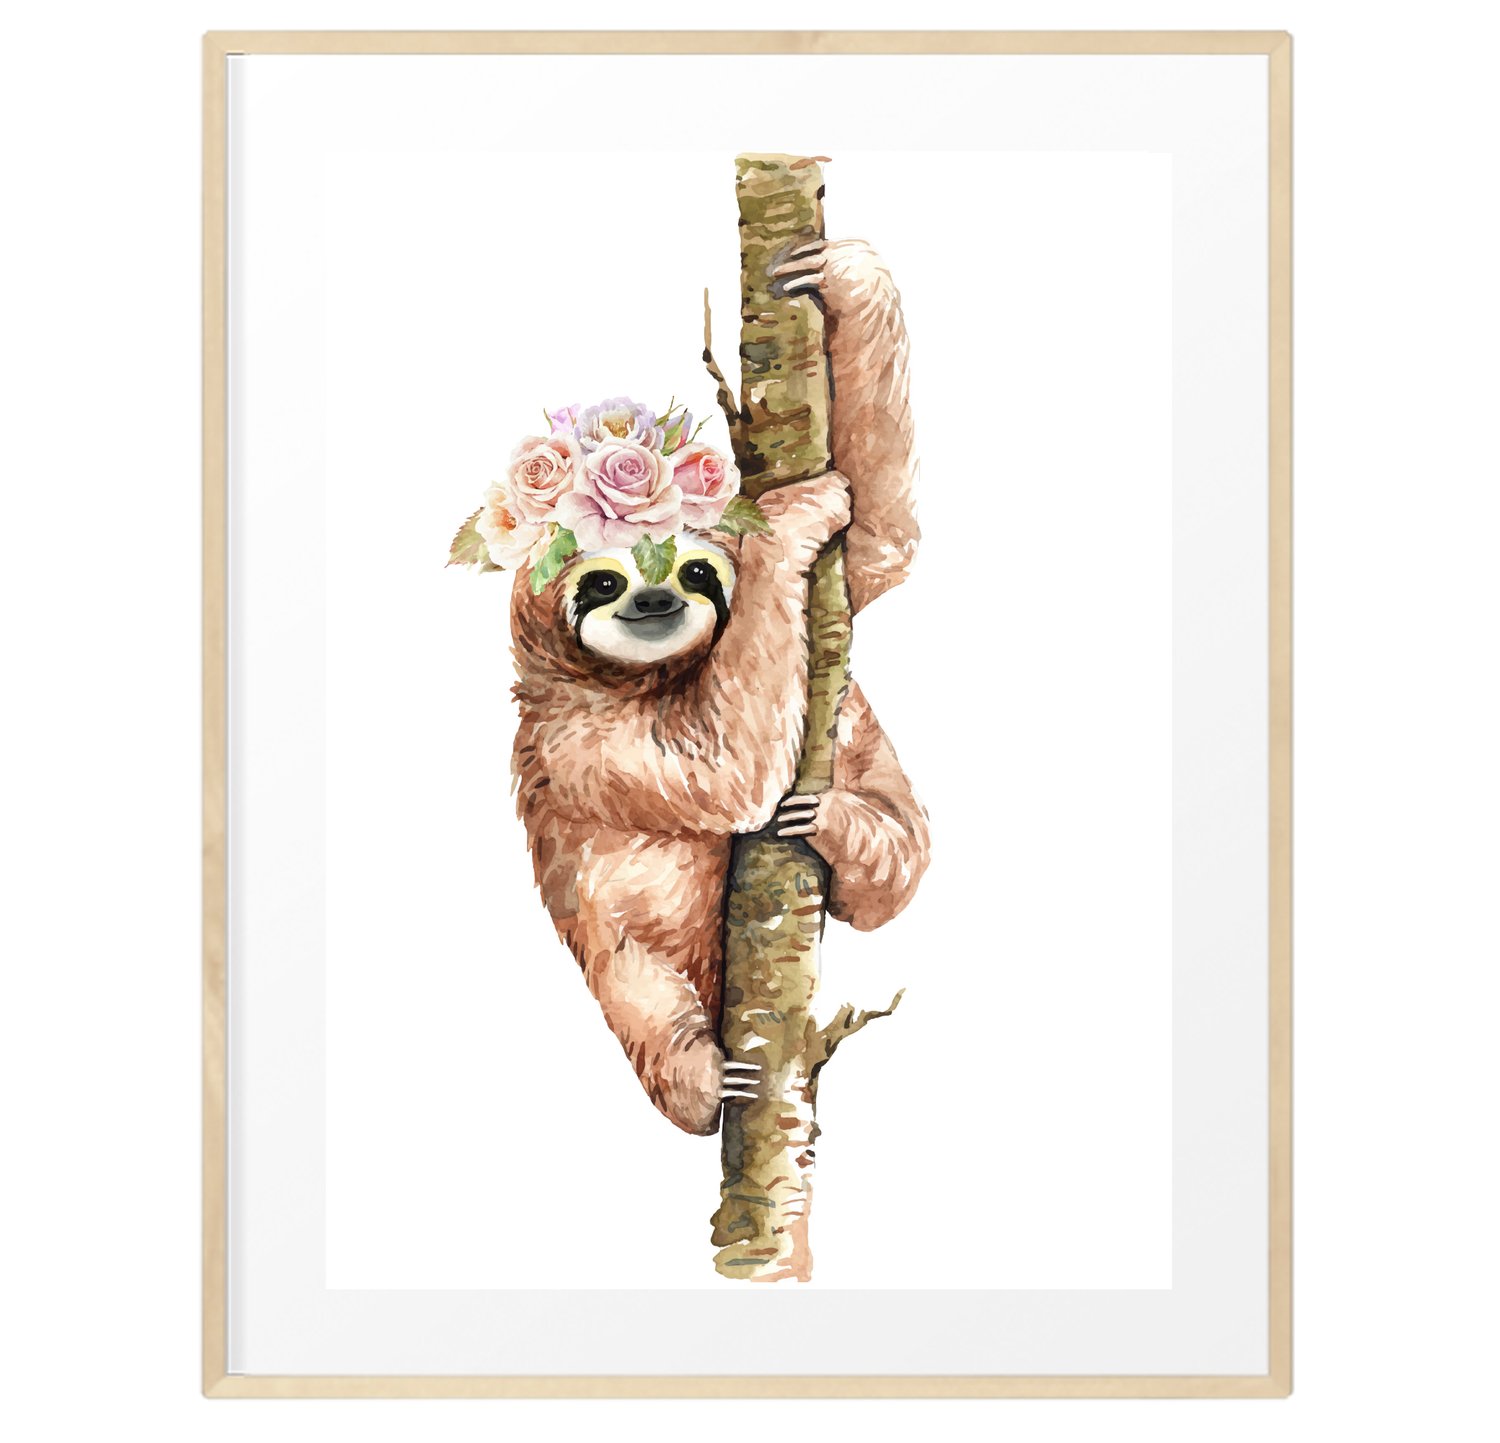 Image of Baby sloth flower crown print